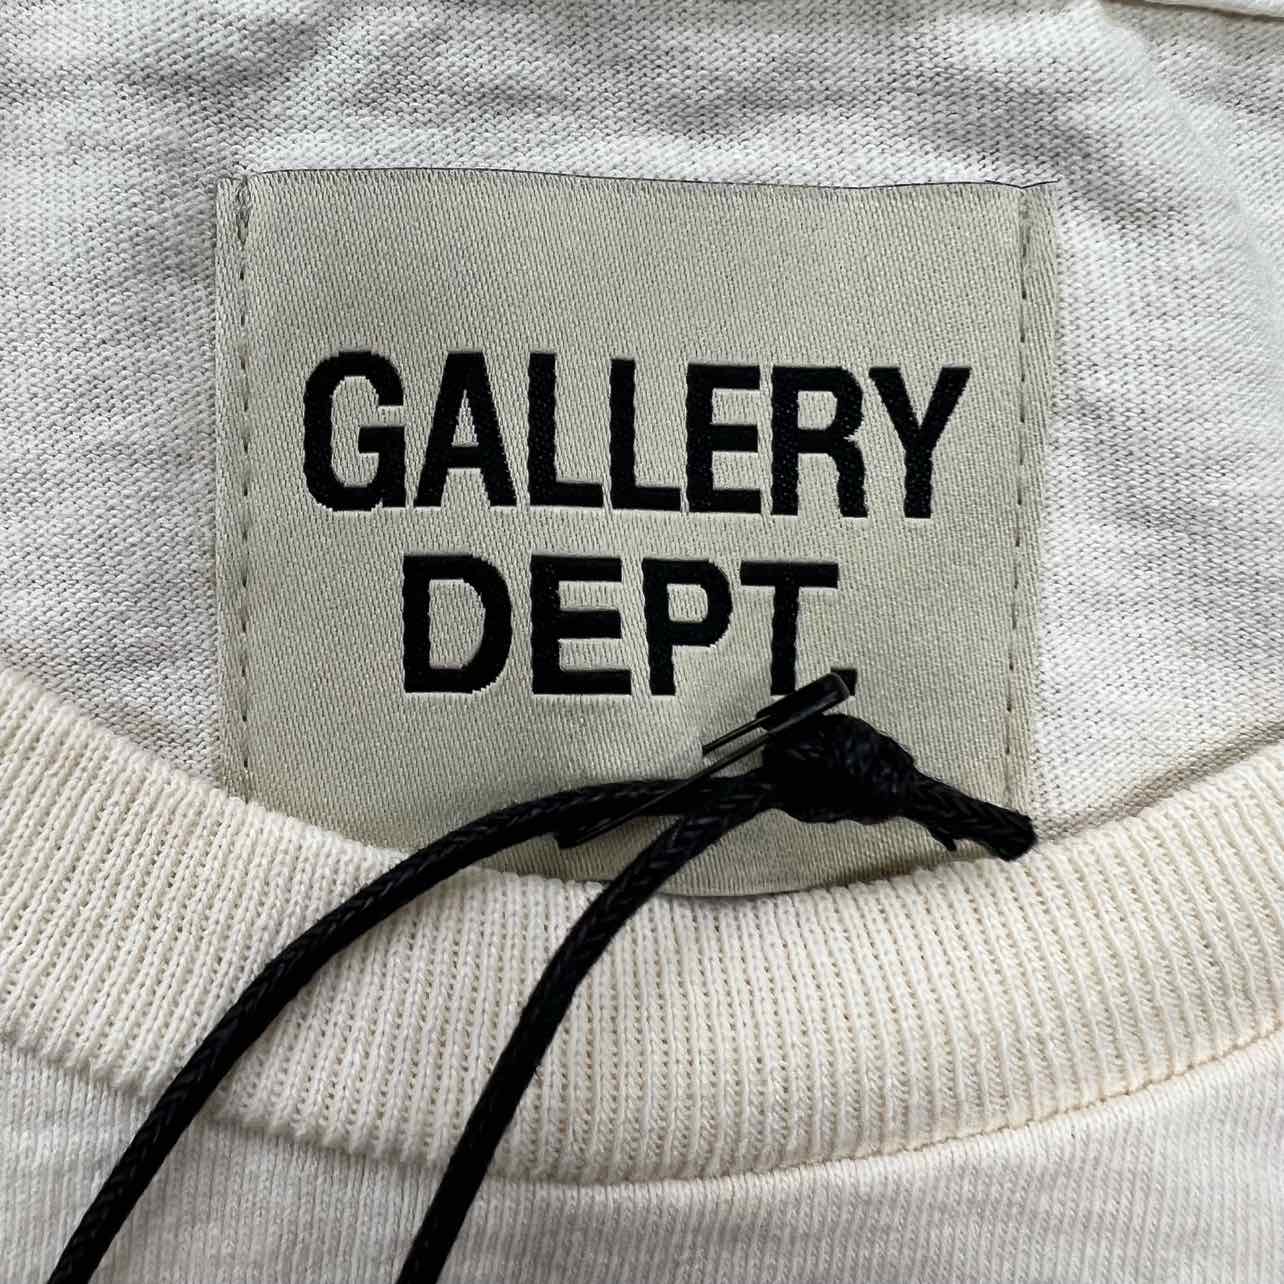 Gallery DEPT. T-Shirt "POCKET LOGO" Cream New Size M